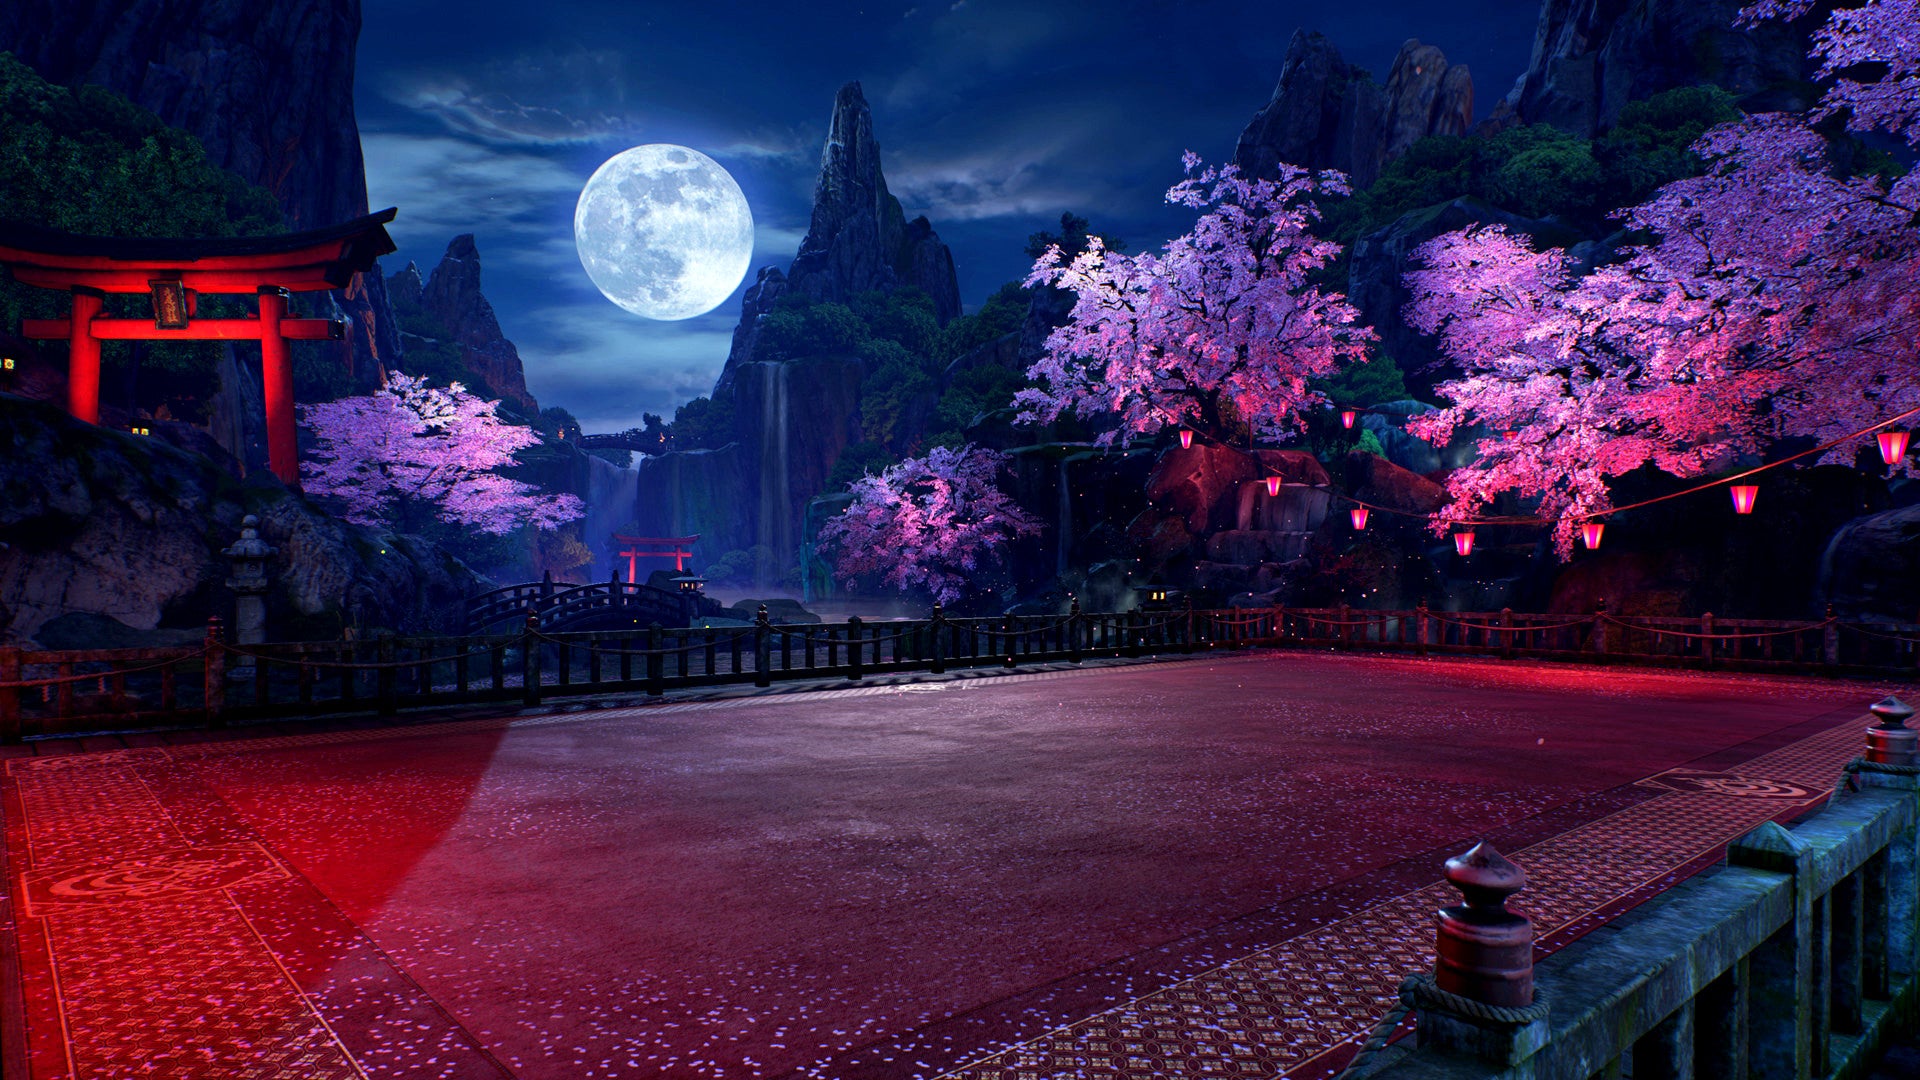 Bilder zu Tekken 8: Mini-Teaser, Fans vermuten Ankündigung bei den Game Awards